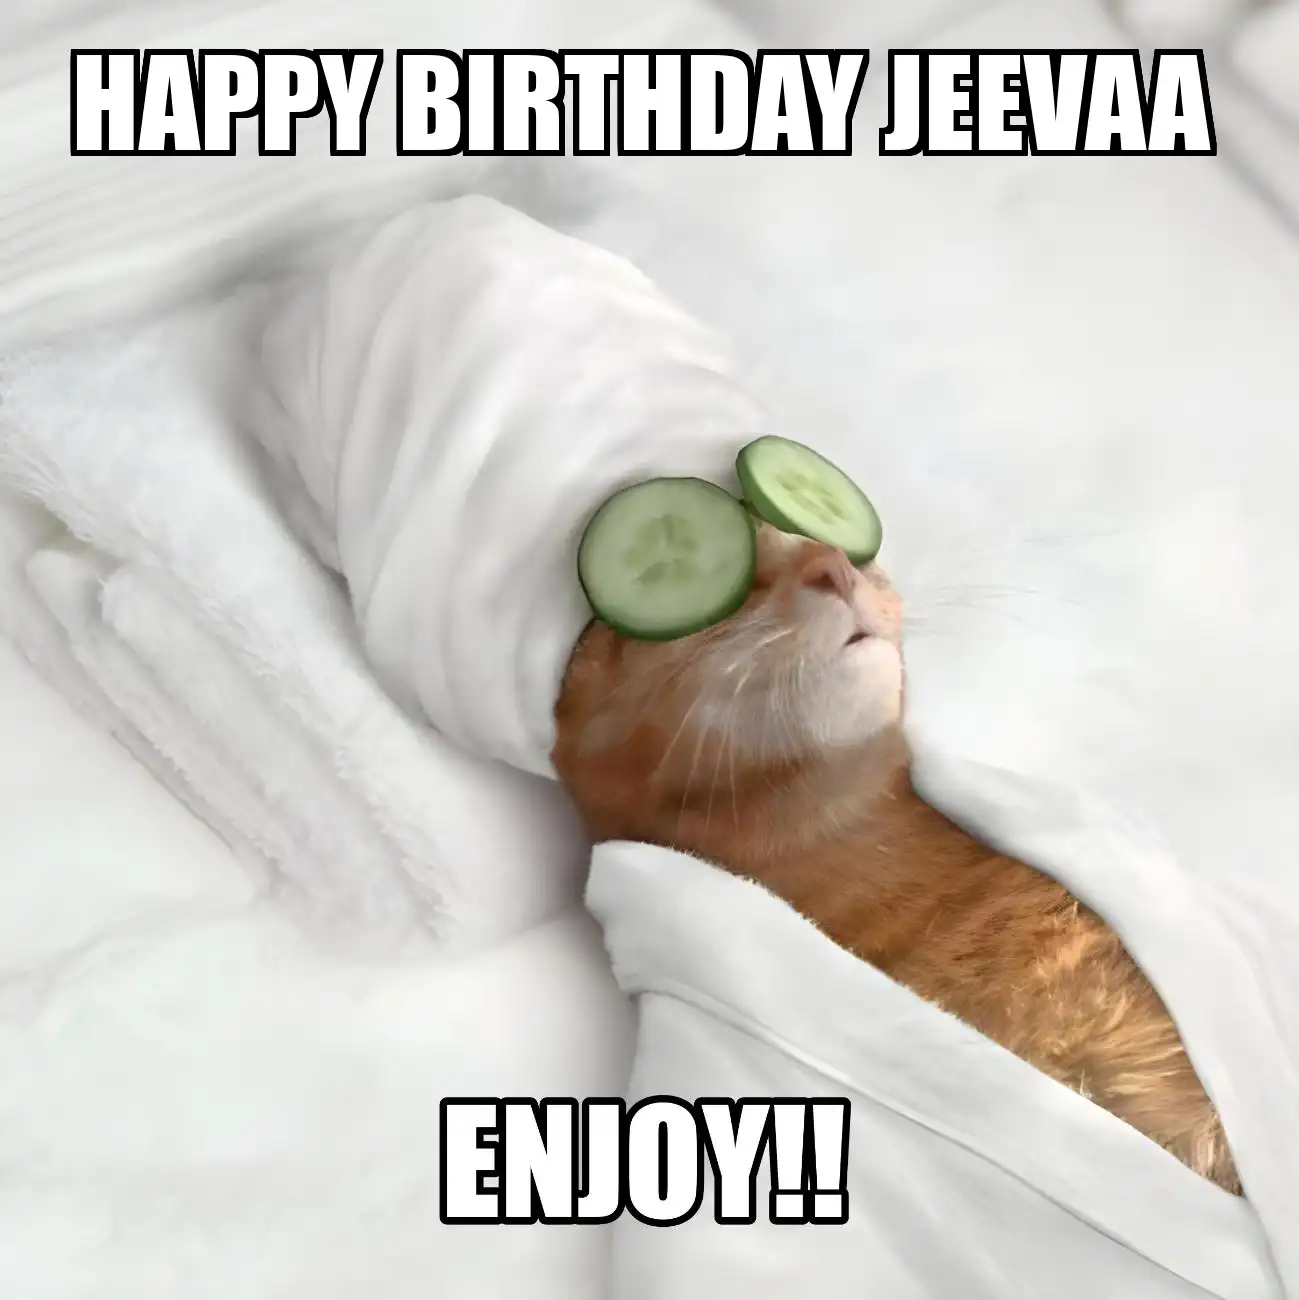 Happy Birthday Jeevaa Enjoy Cat Meme